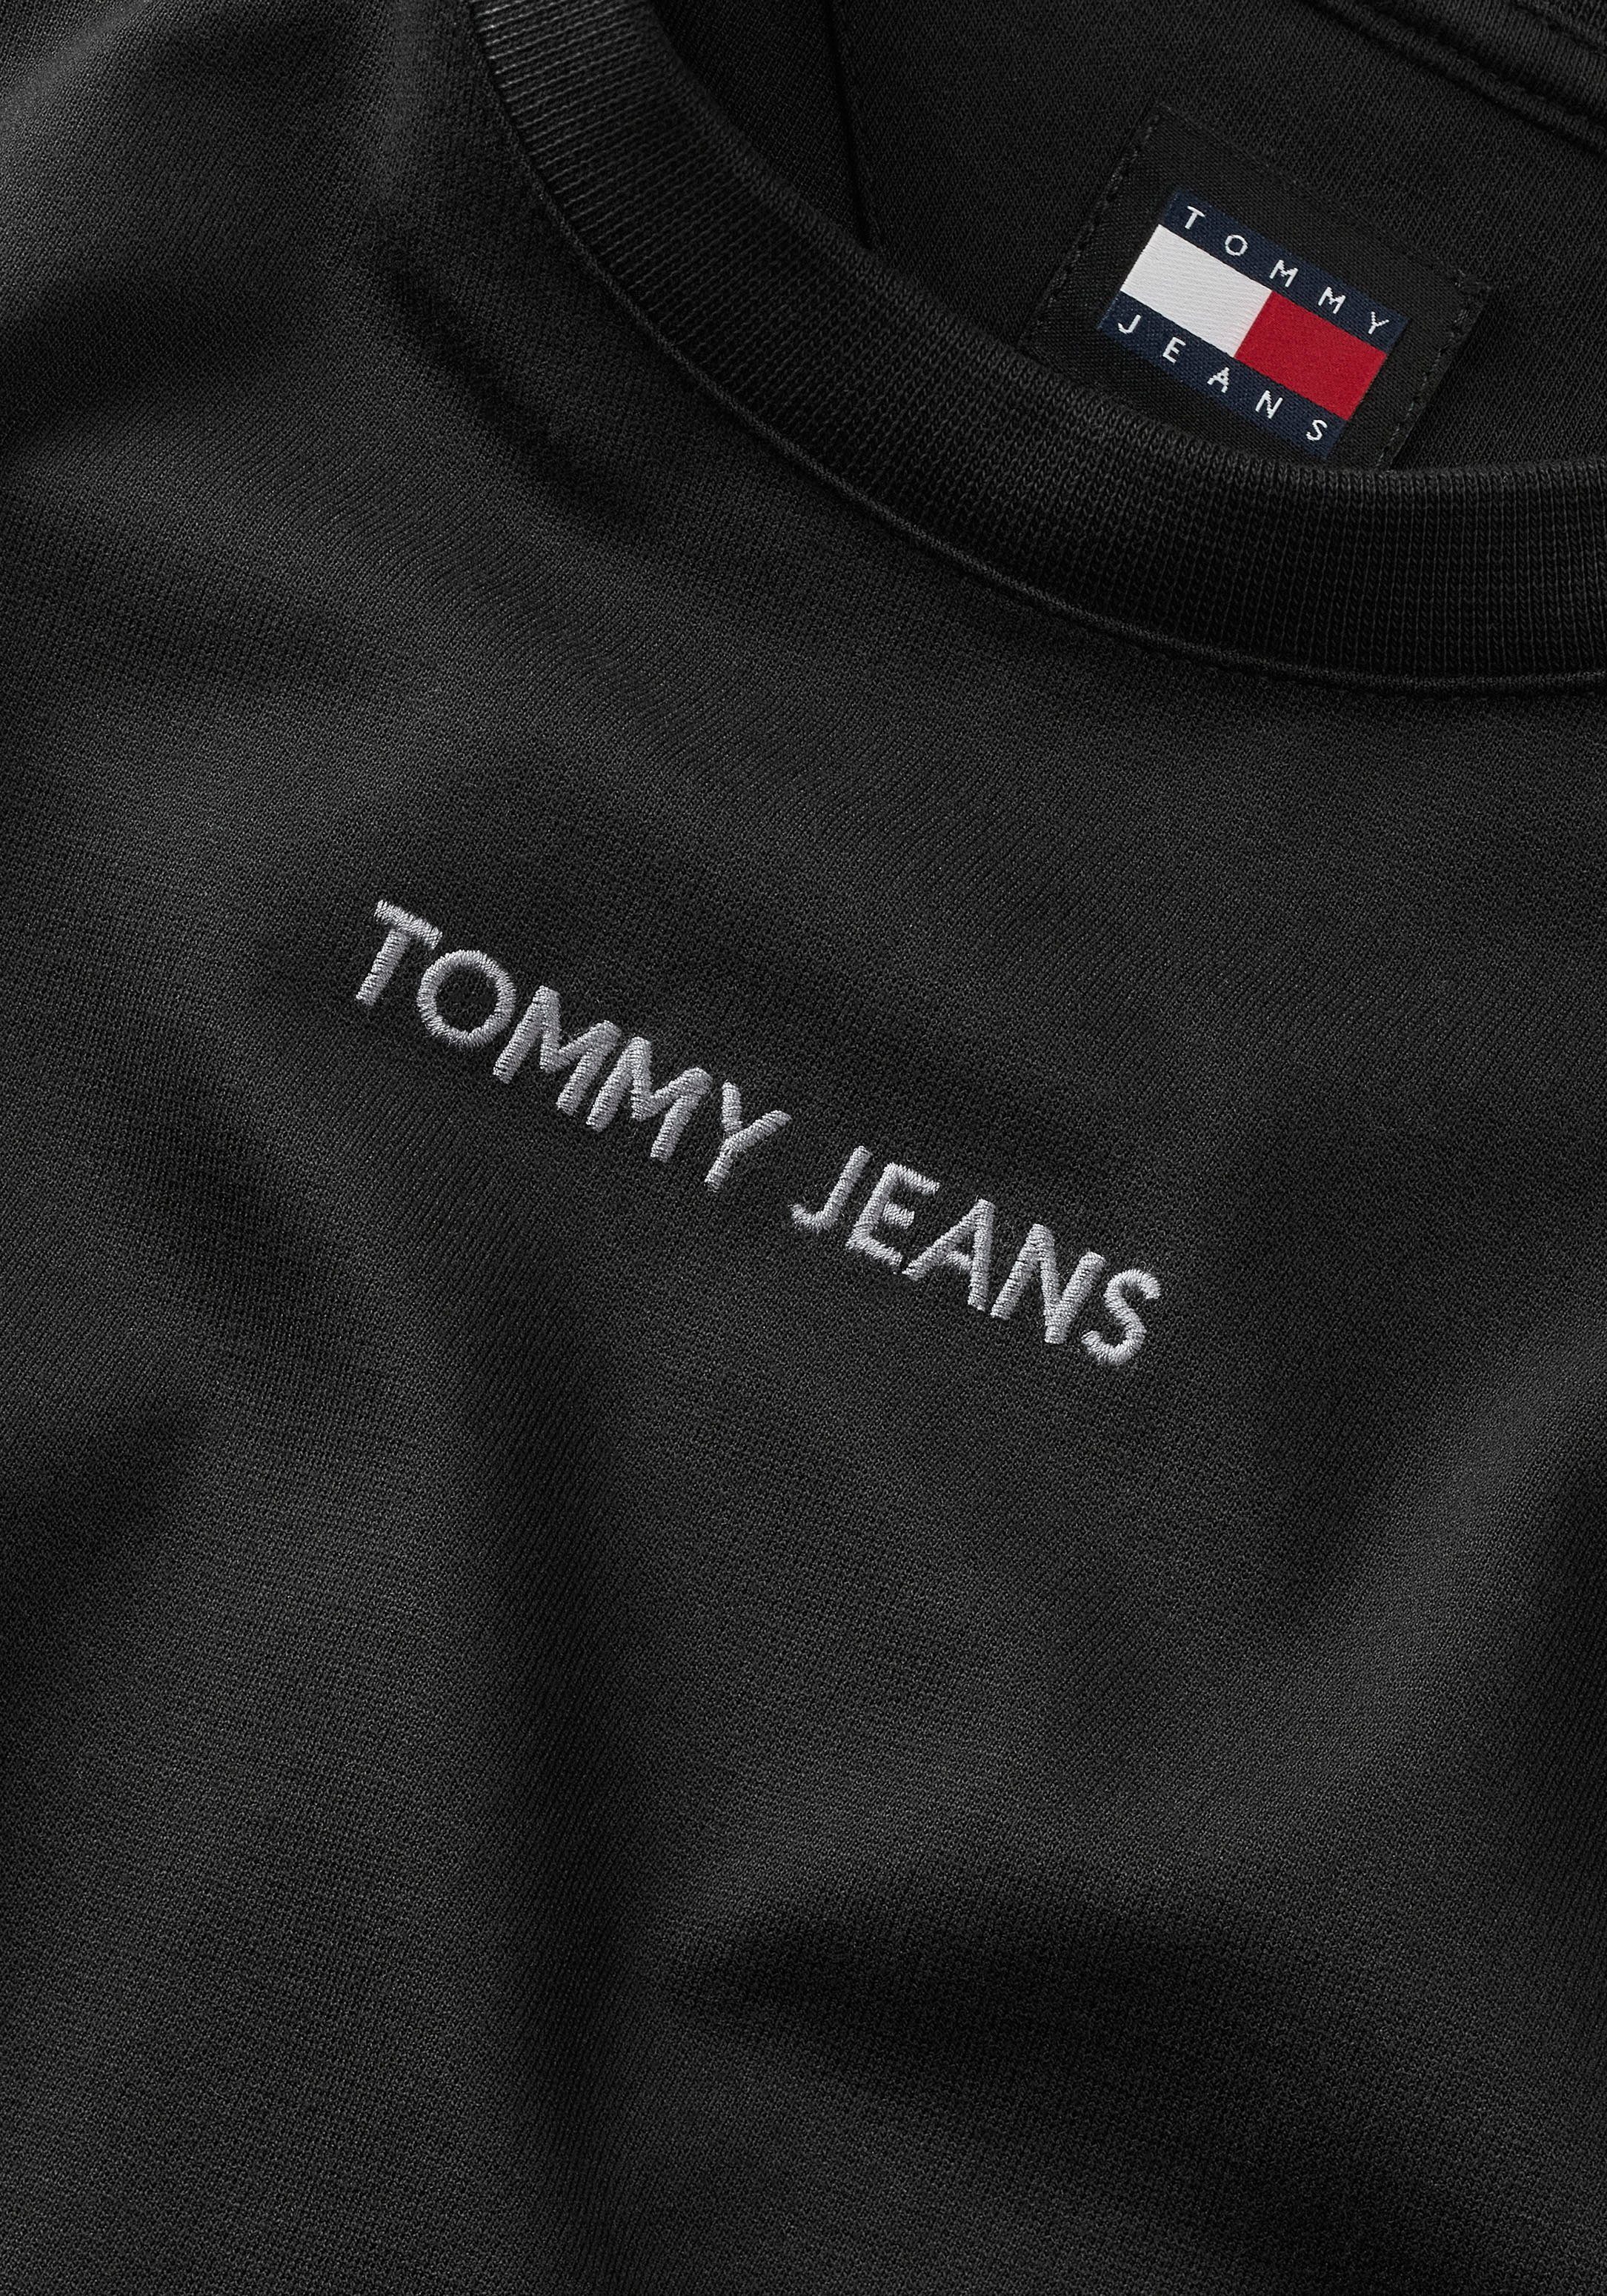 Logostickerei TJW Tommy Jerseykleid mit Jeans CLASSIC SMALL BDYCN Curve MIDI EXT